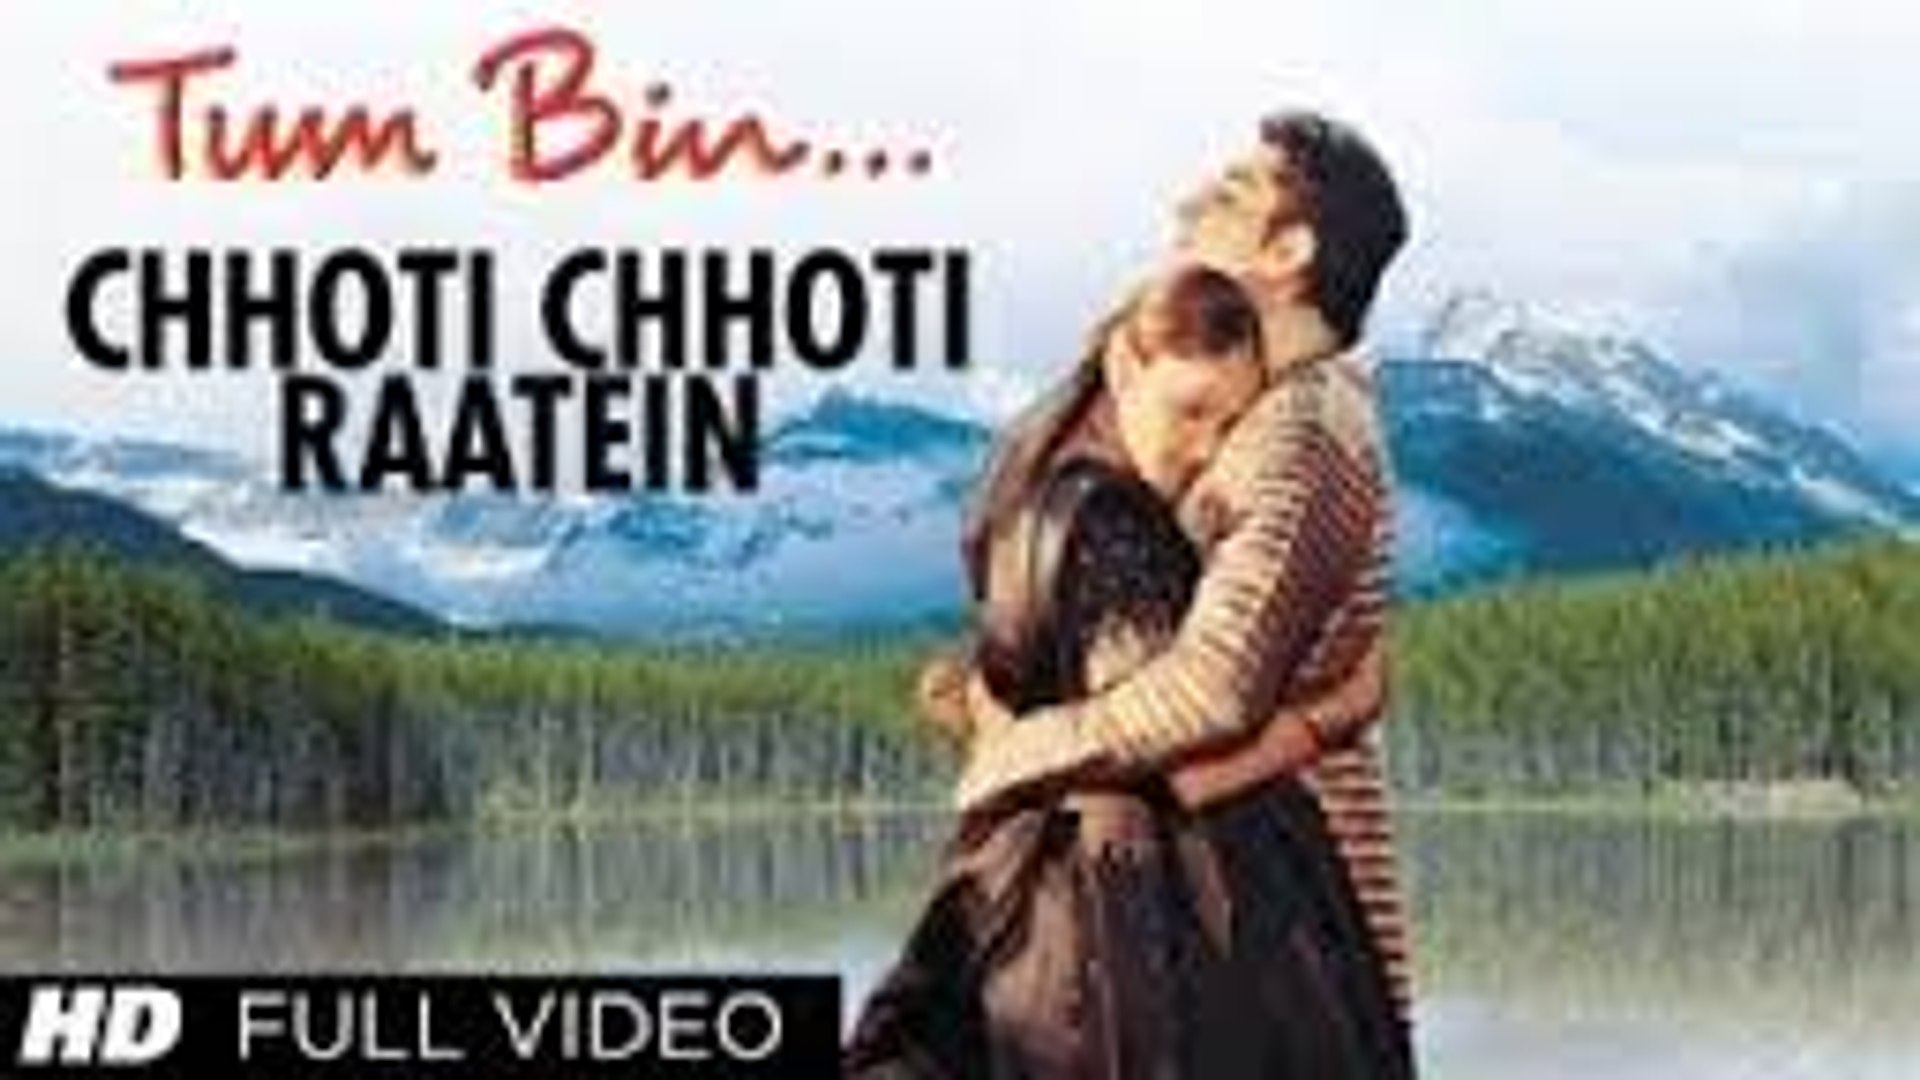 Chhoti Chhoti Raatein... Tum Bin... Love Will Find A Way - video Dailymotion